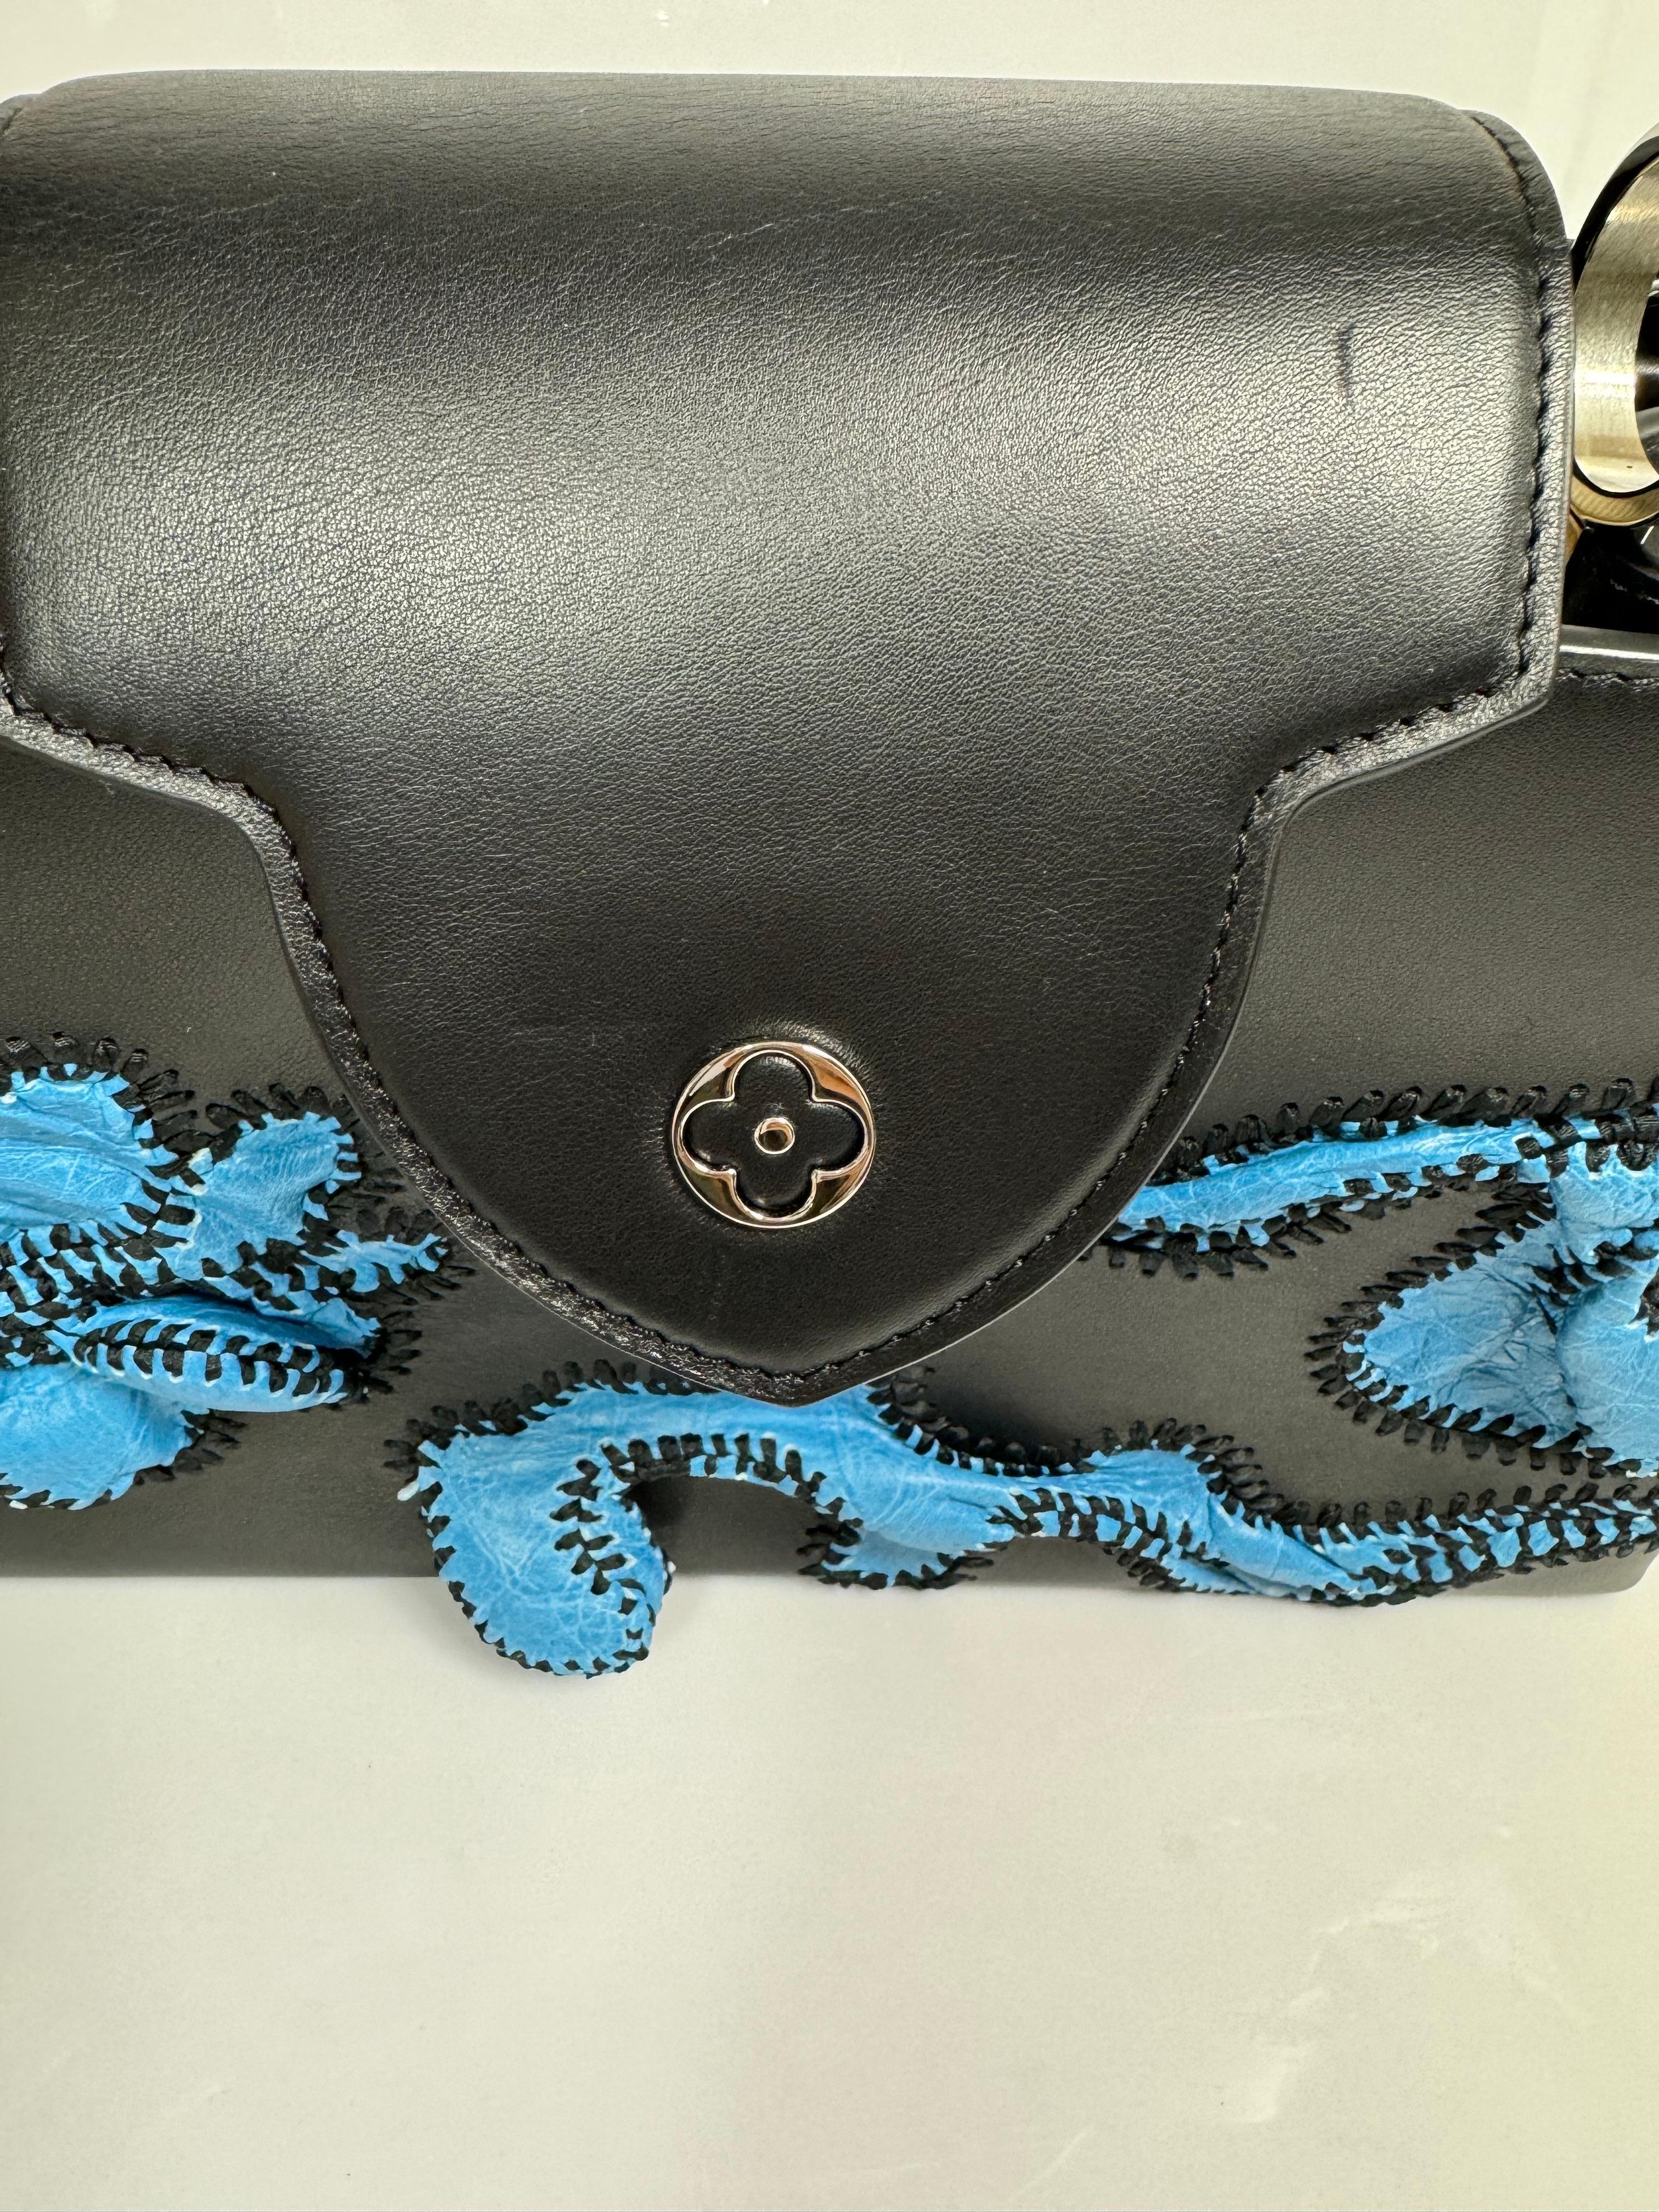 Louis Vuitton Limited Edition Nicholas Hlobo's Artycapucines Handbag-NEW IN BOX For Sale 7